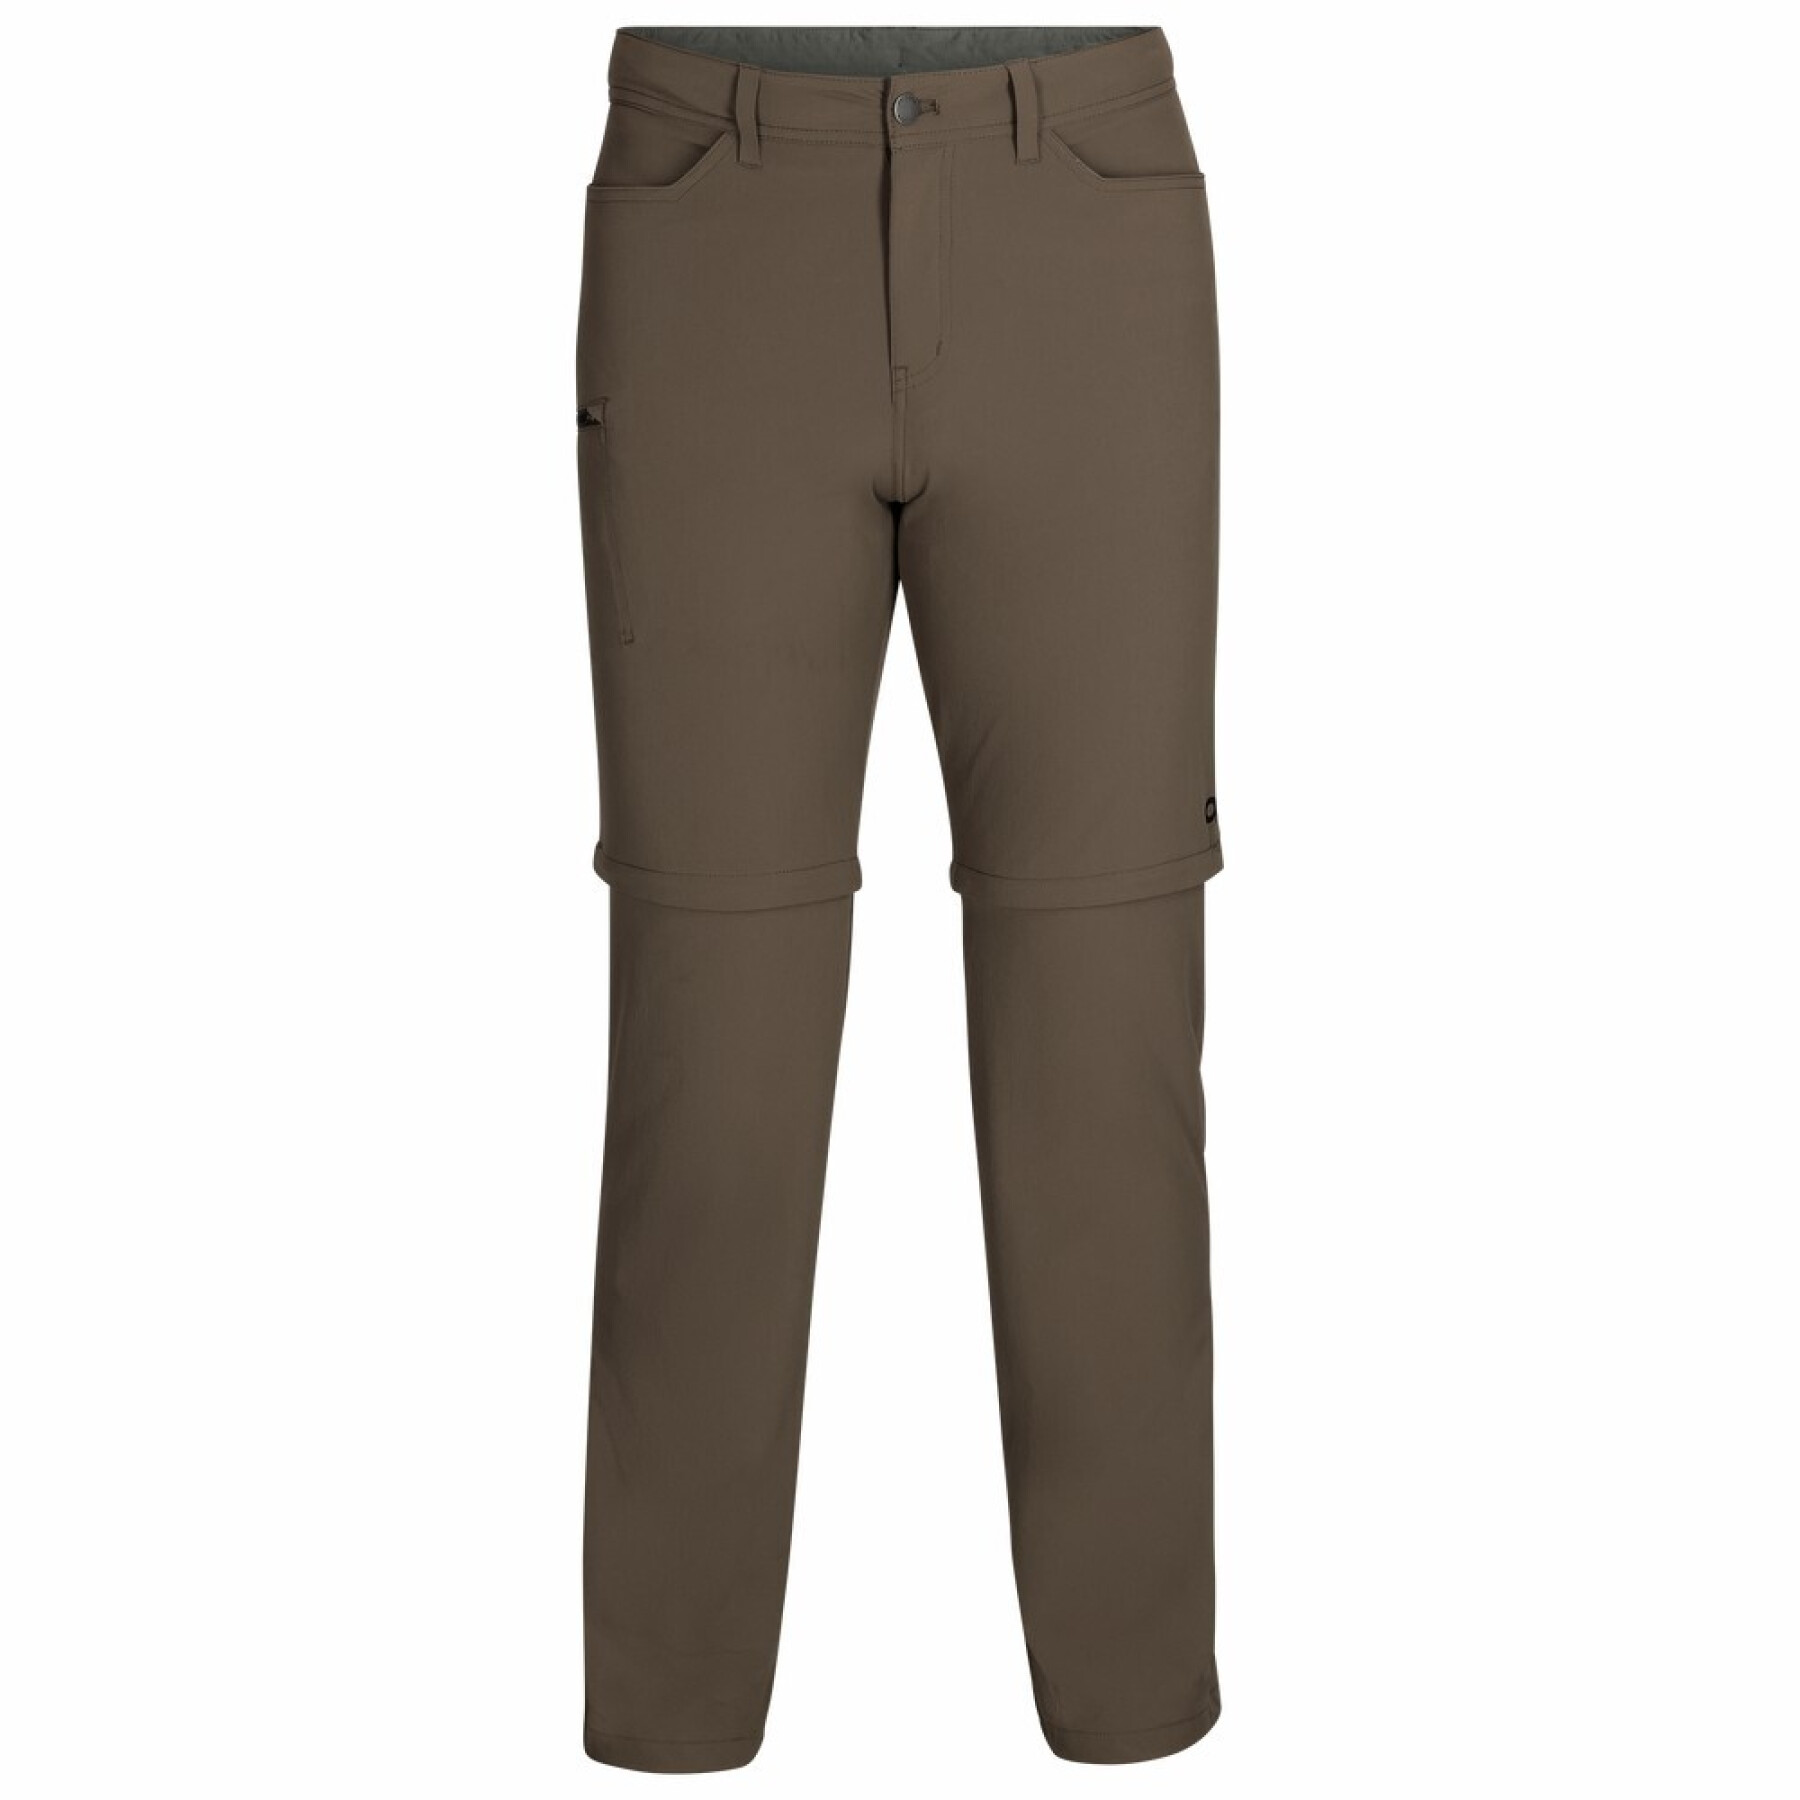 Pantalon converitble Outdoor Research Ferrosi 34"